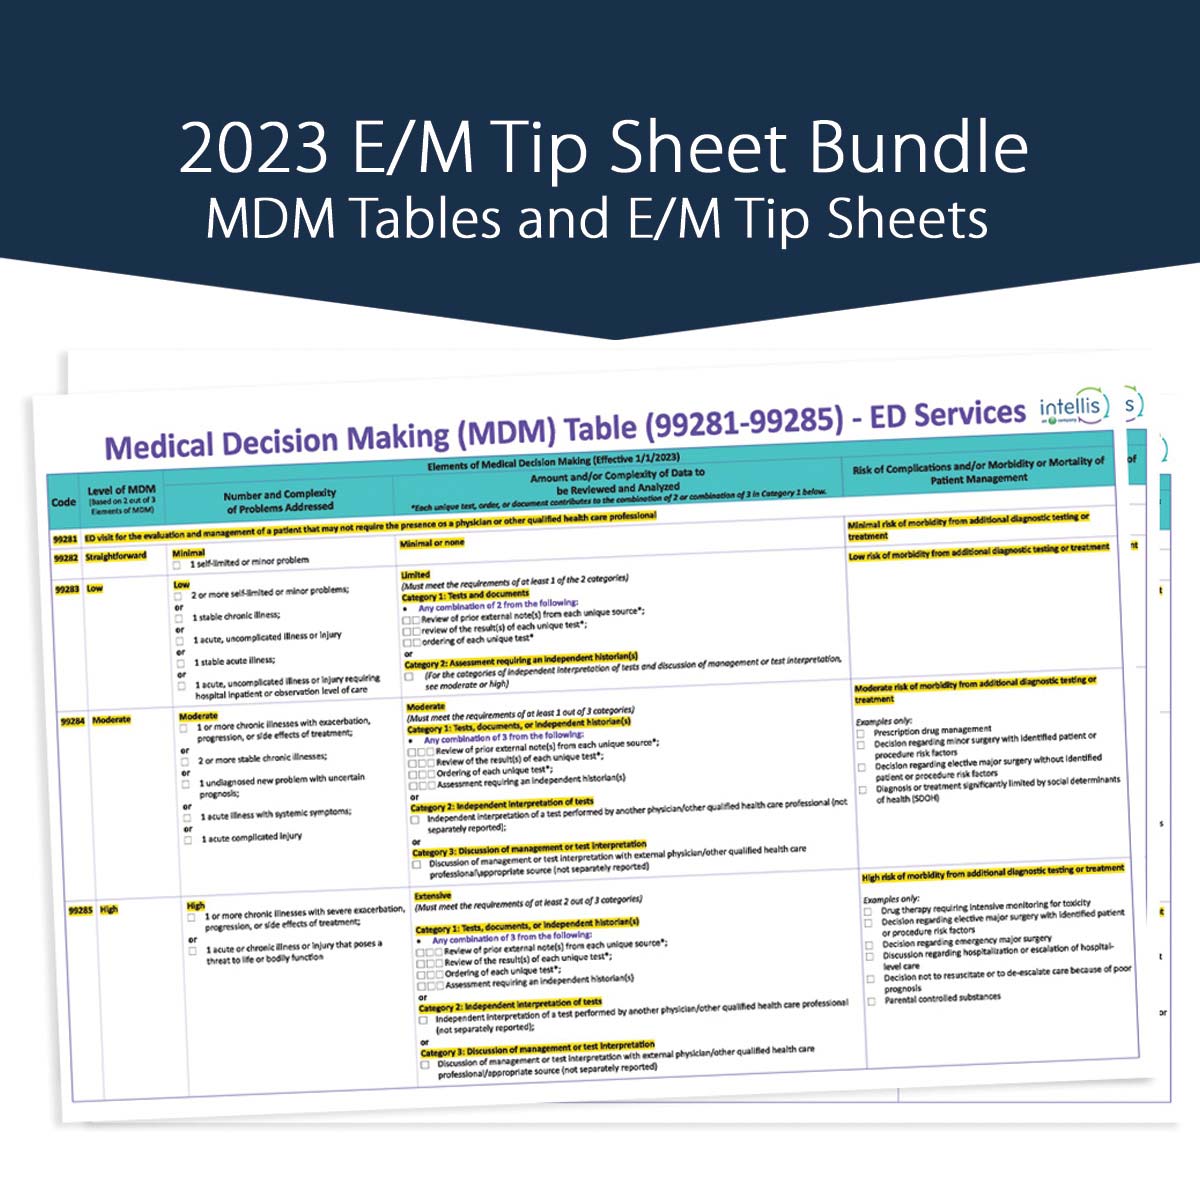 Fi 2023 EM Tip Sheet Bundle 